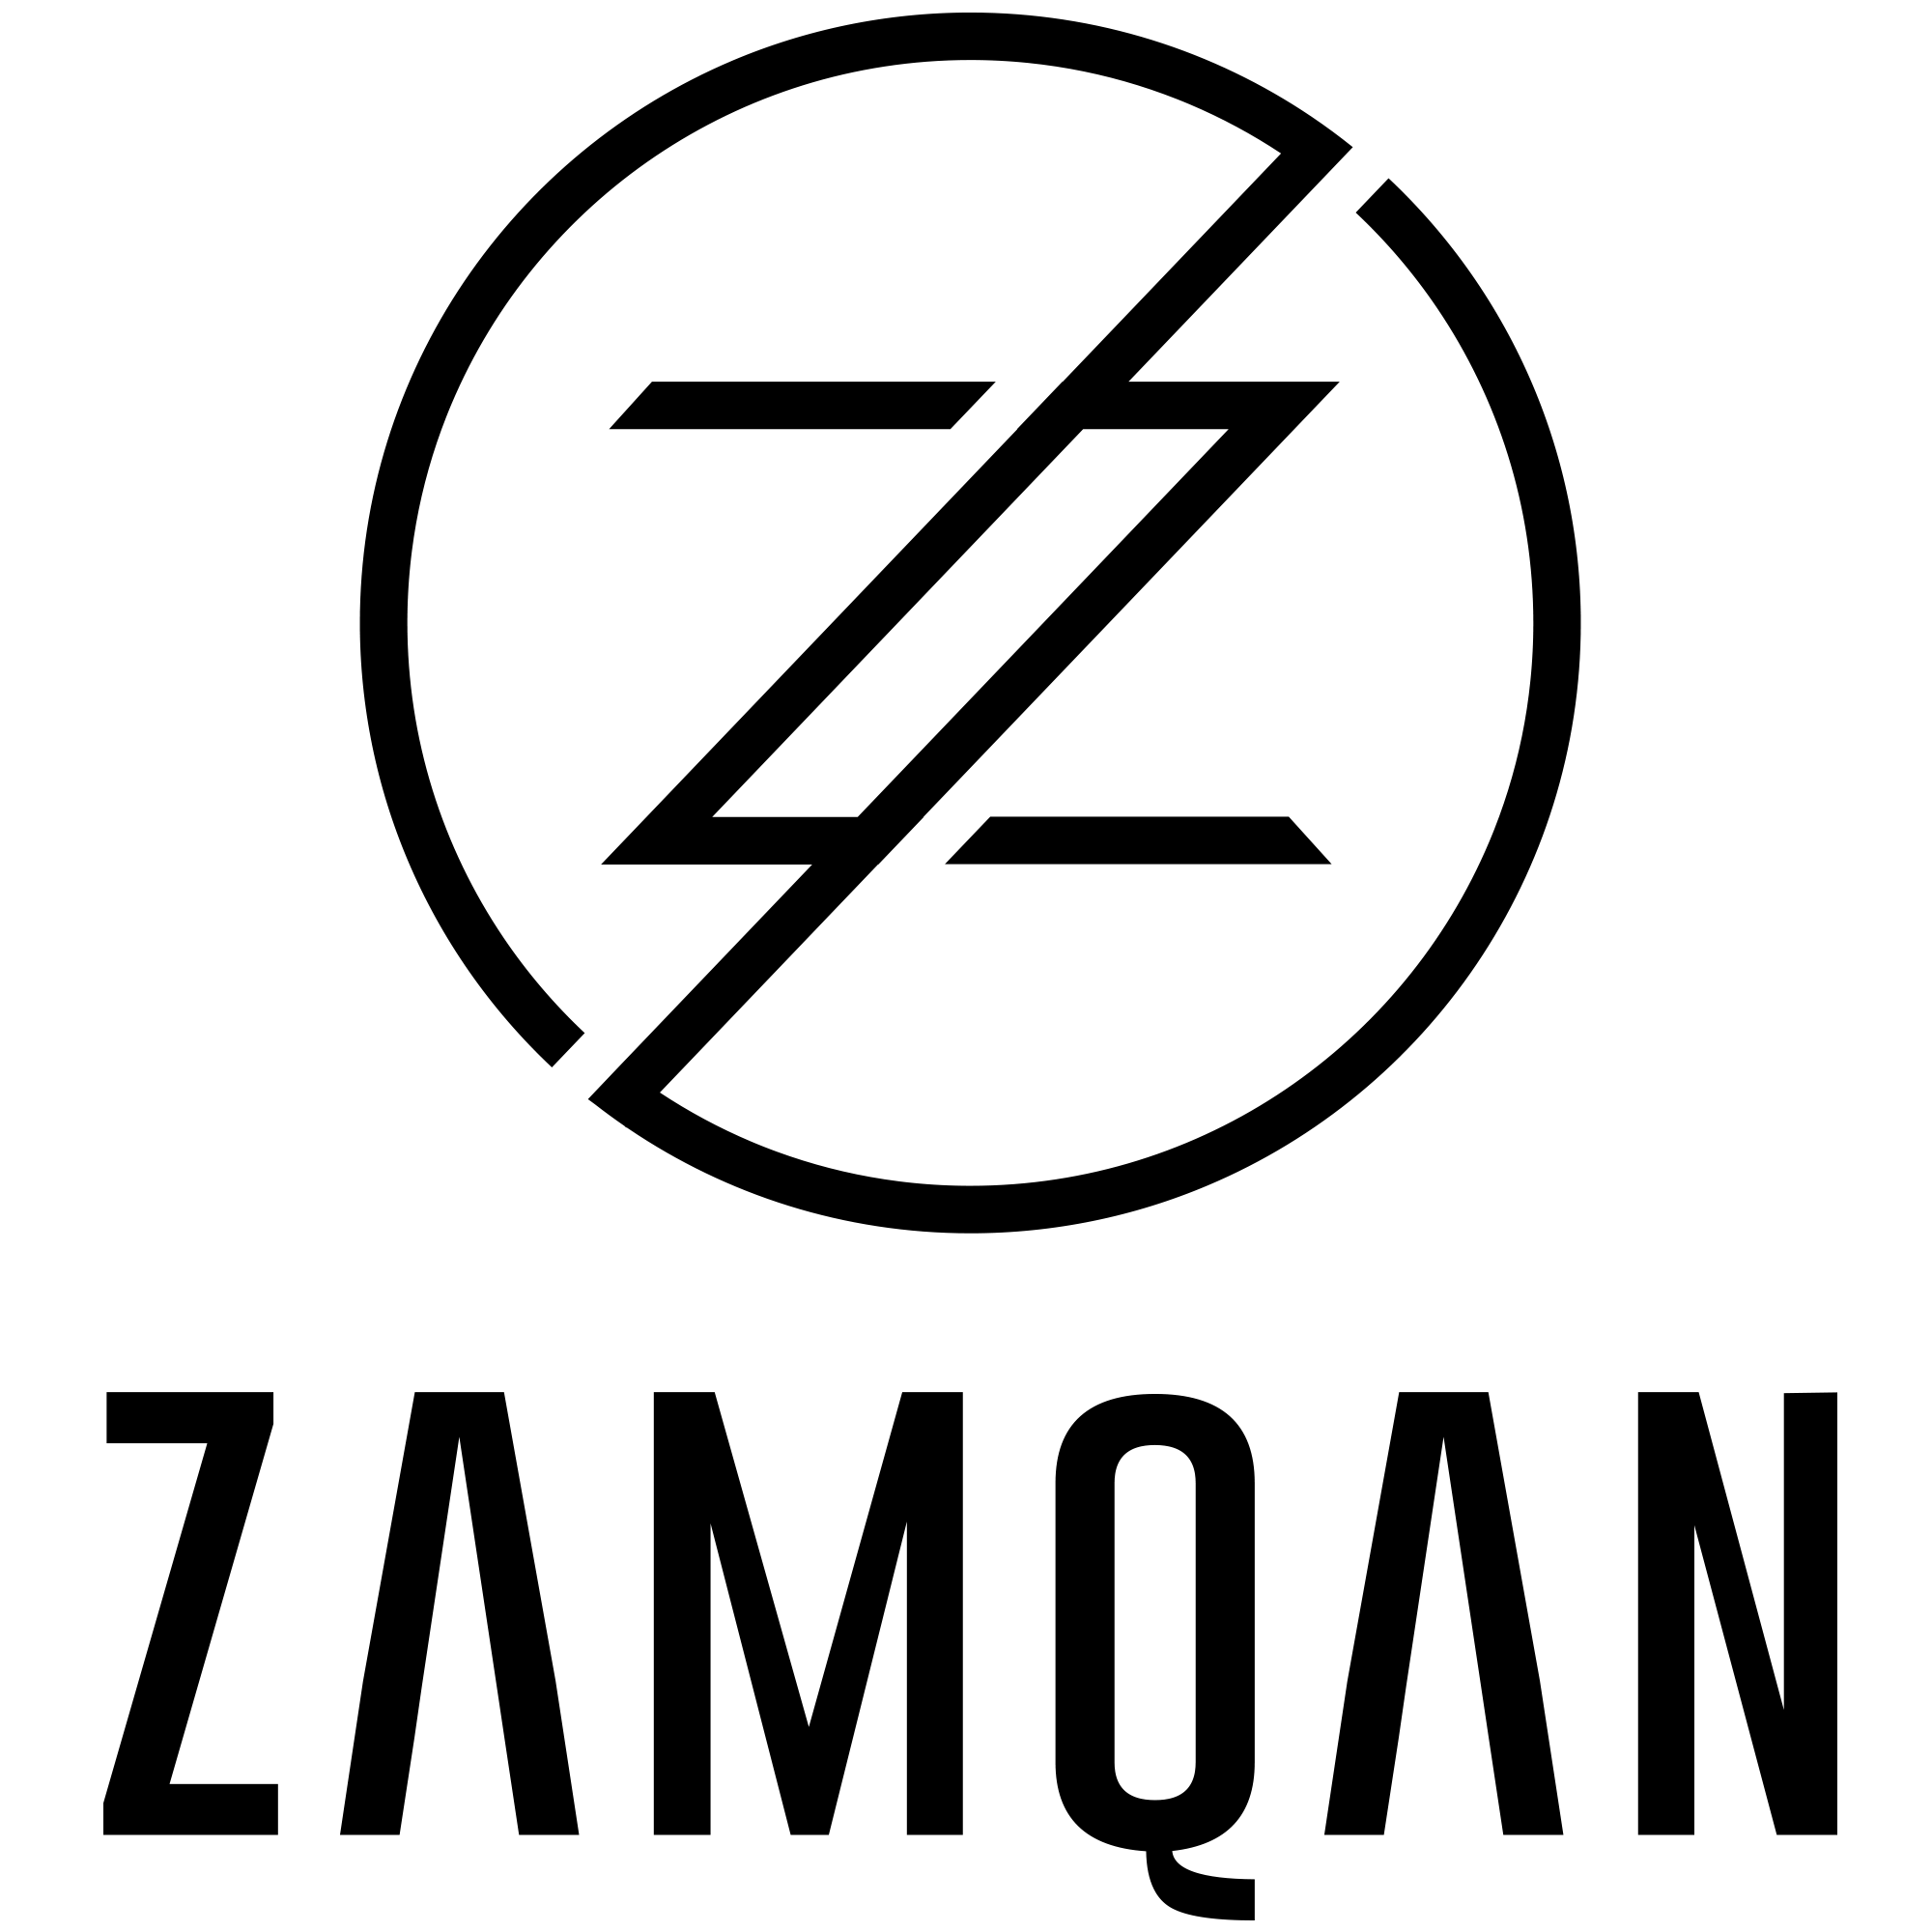 ZAMQAN black logo.png